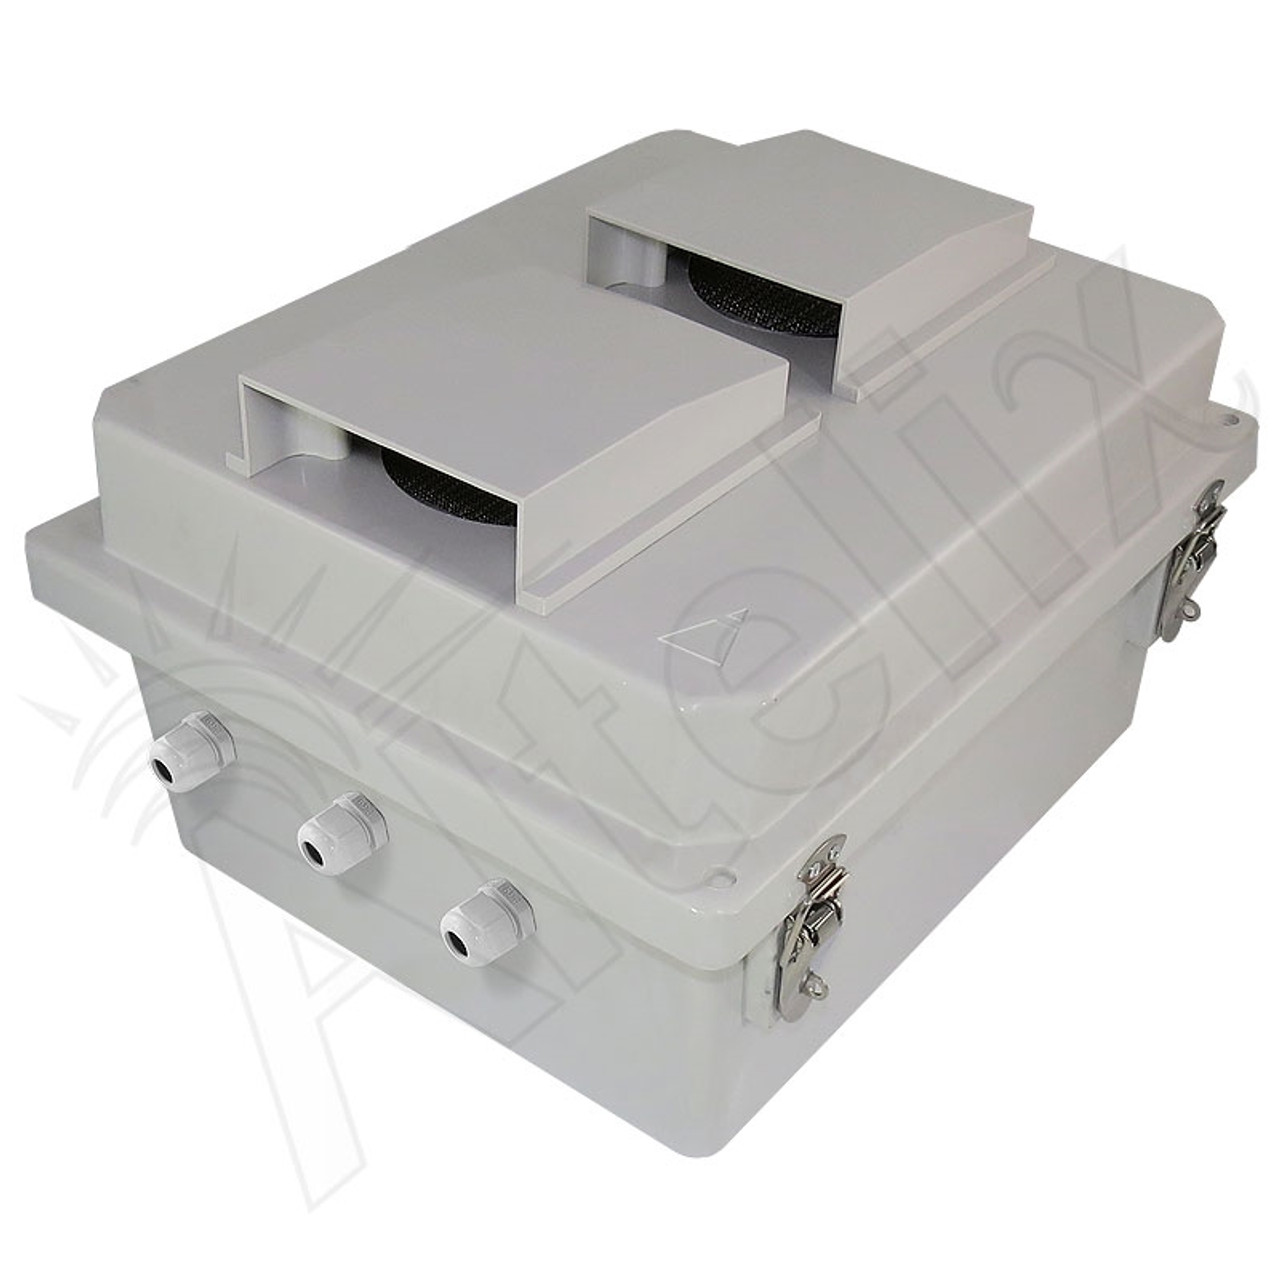 U22.724.18 - Unica System - flush mounting box w. cover frame - 2 x 2 m -  white